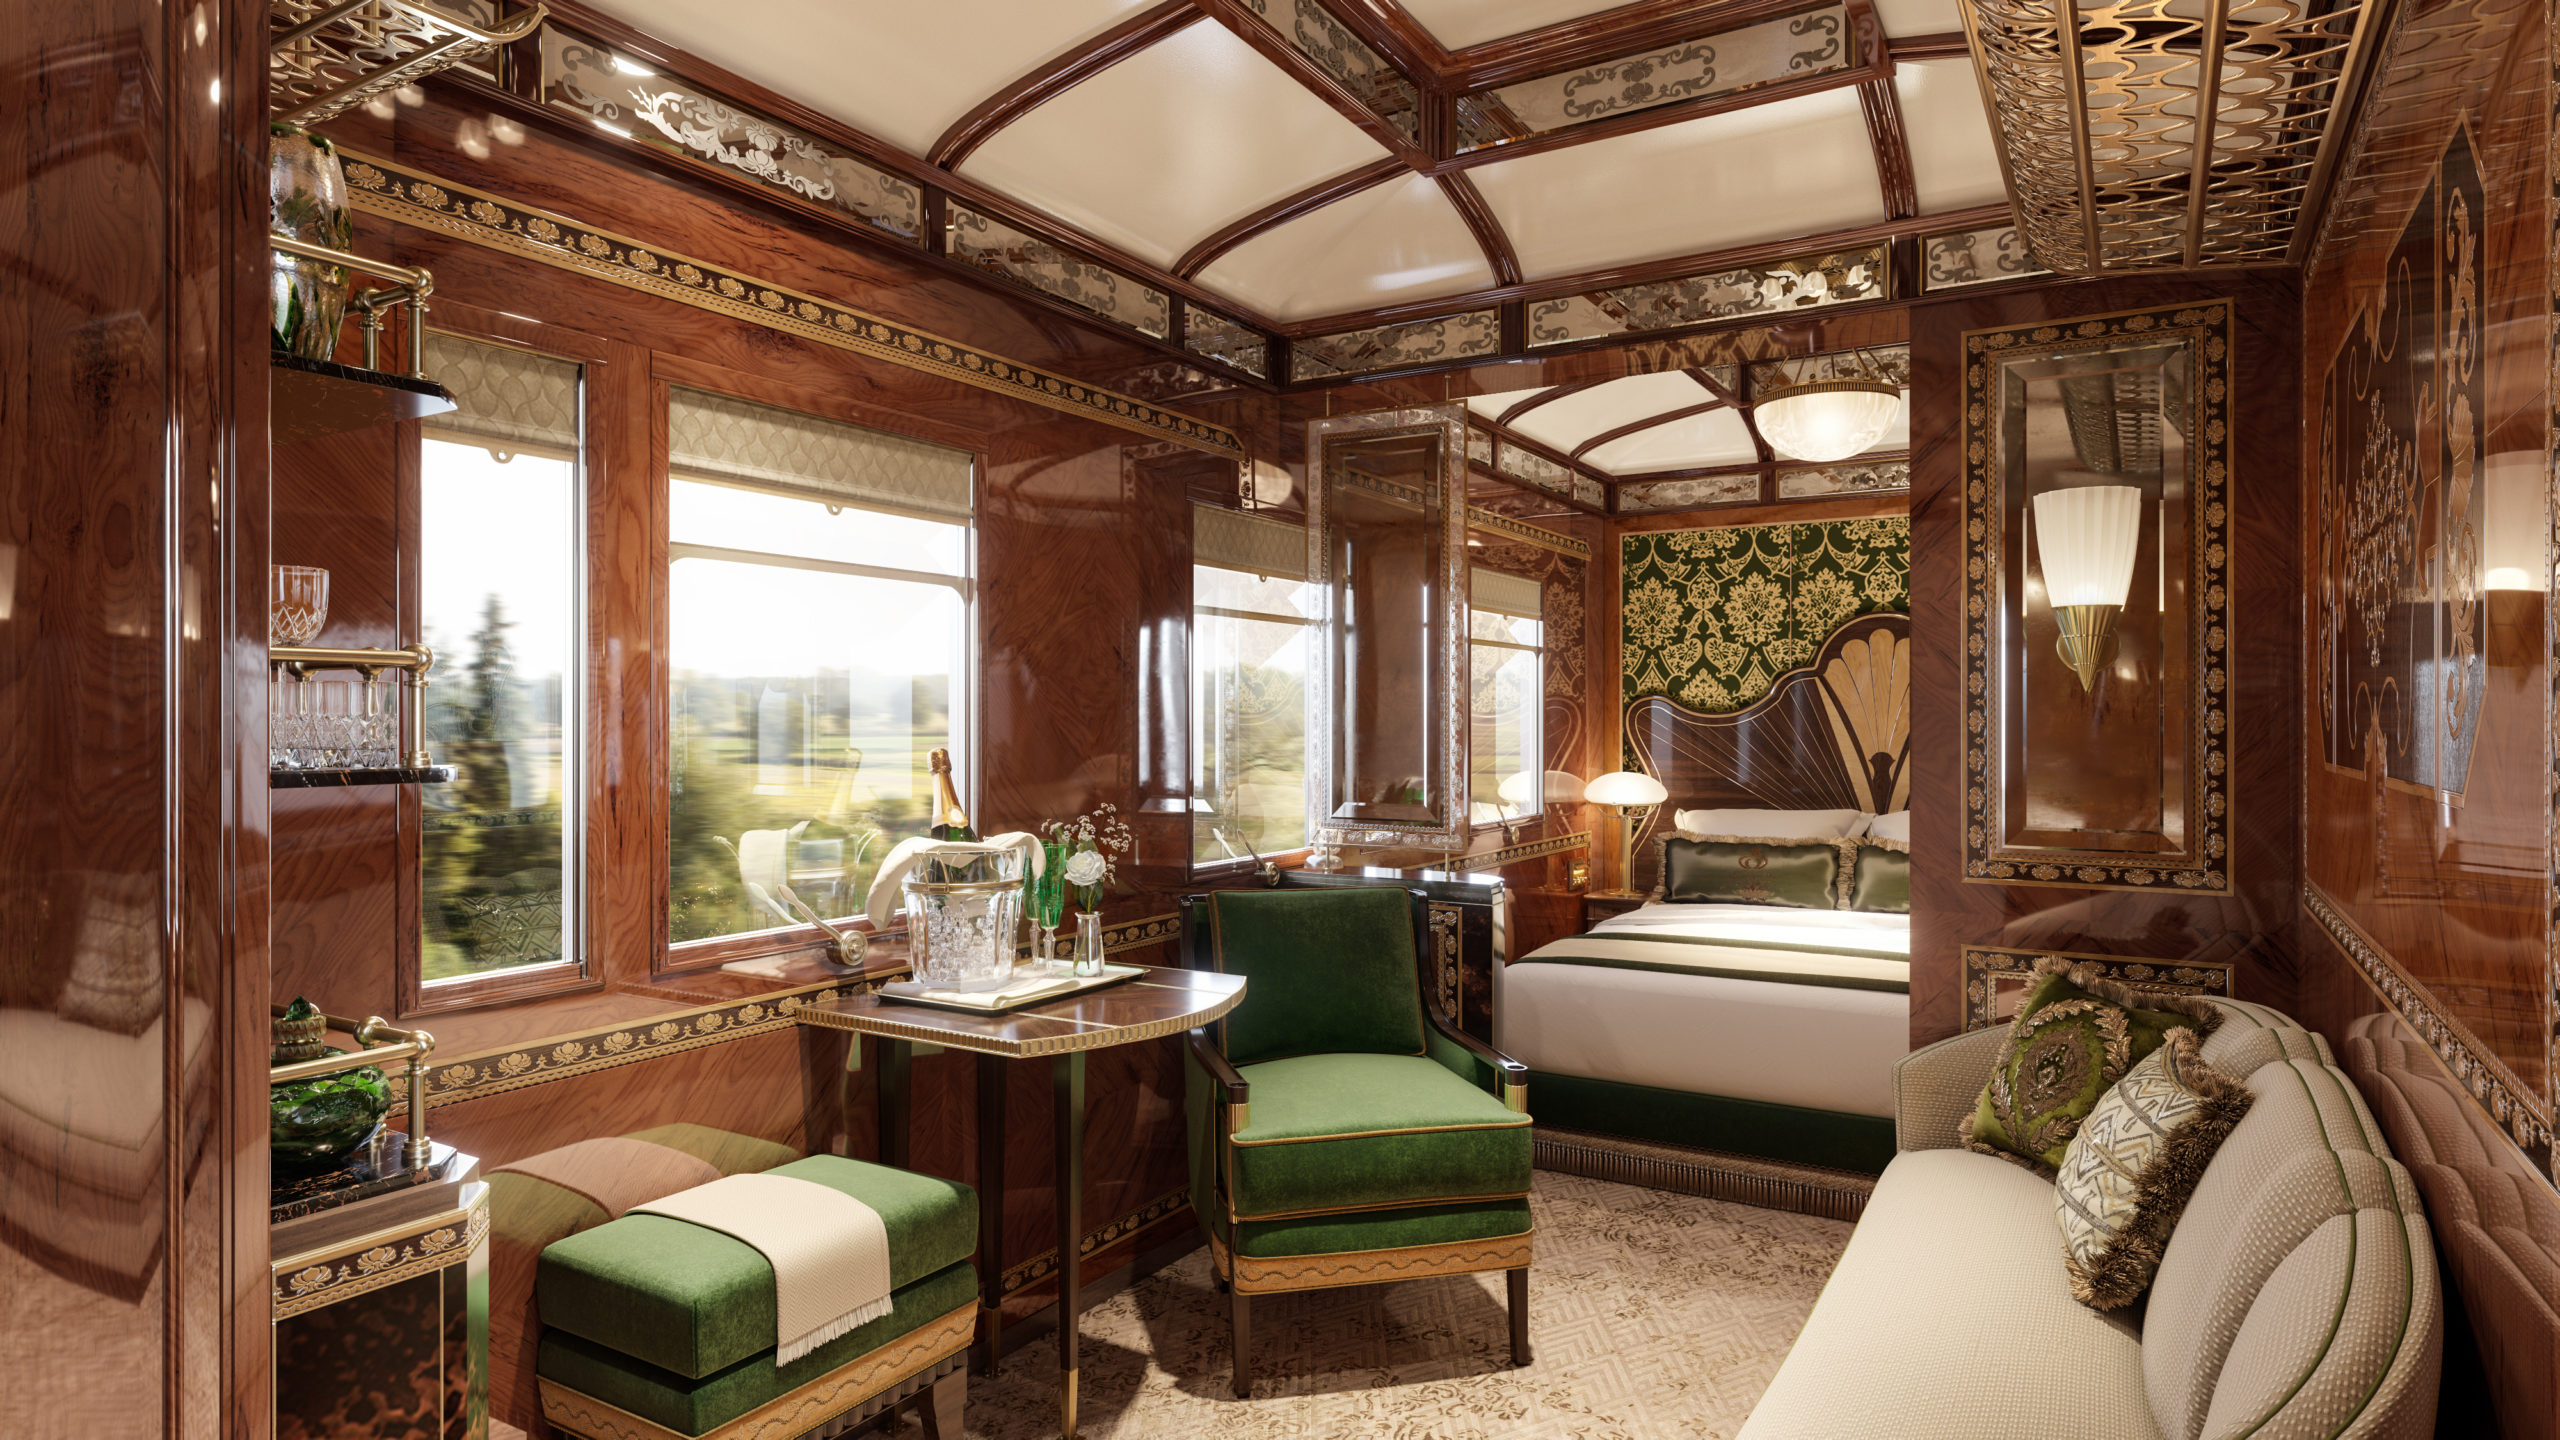 Venice-Simplon Orient Express train plots July return